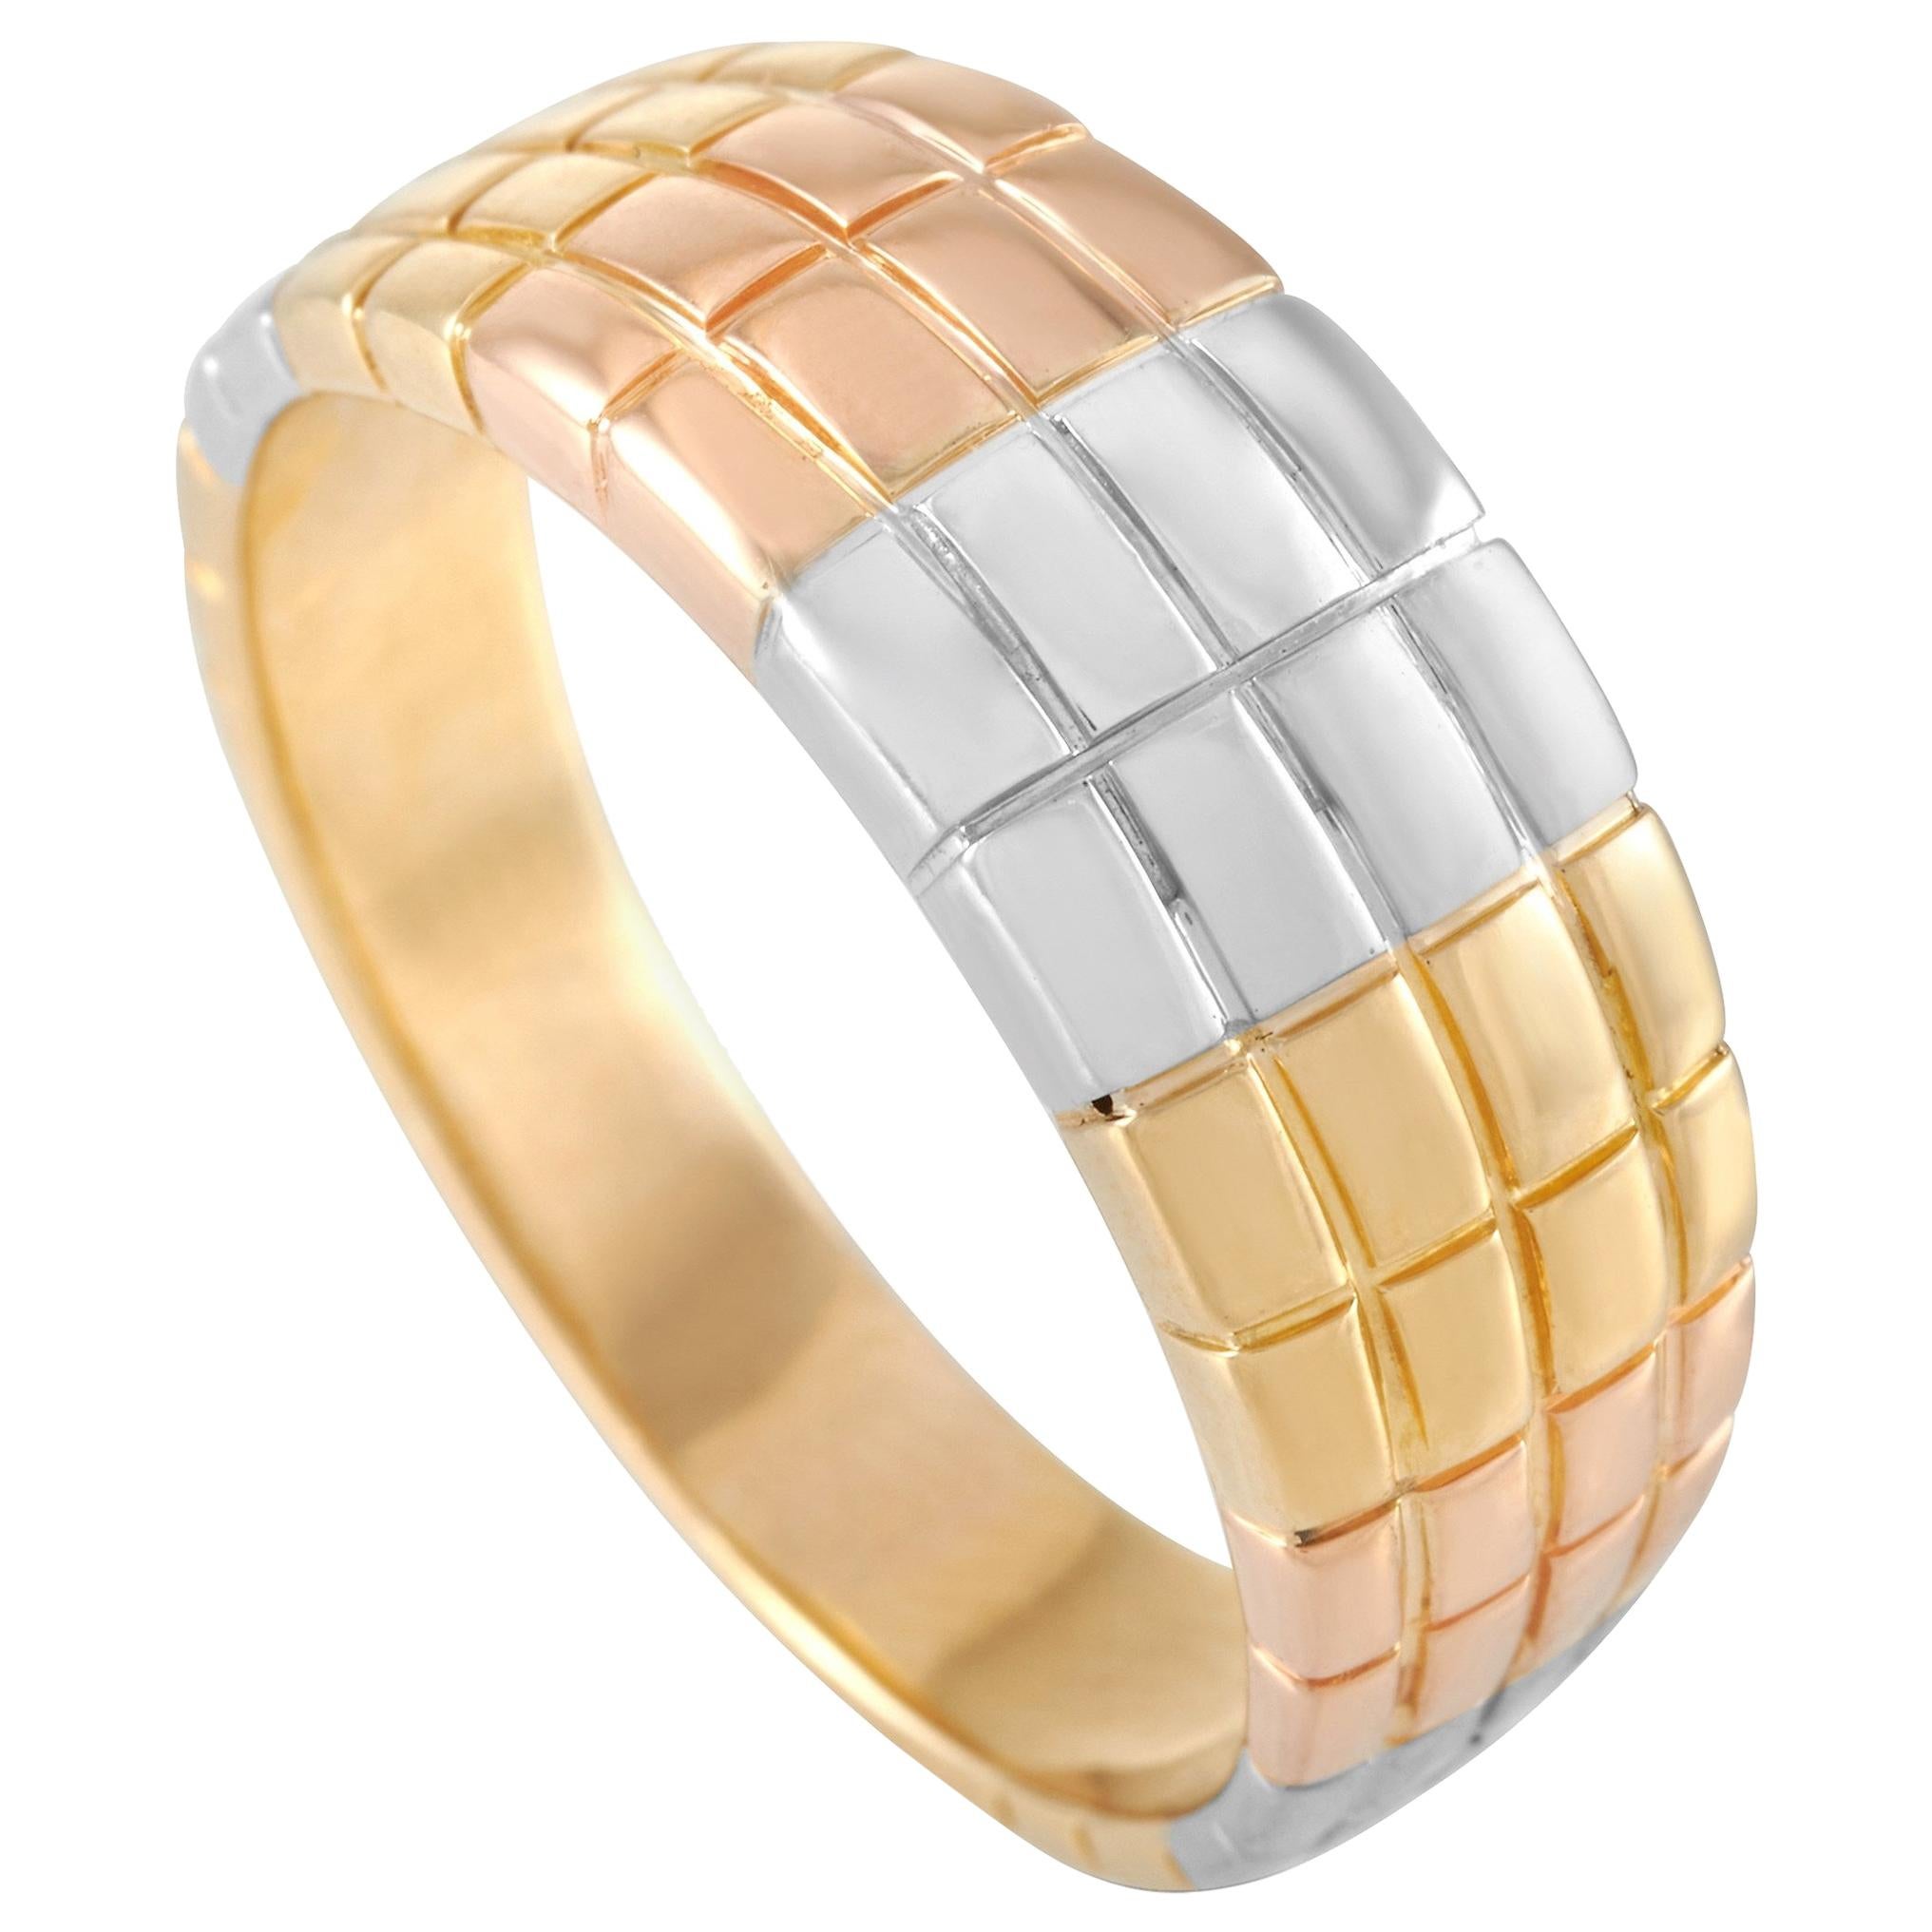 Van Cleef & Arpels 18 Karat Tricolor Textured Band Ring